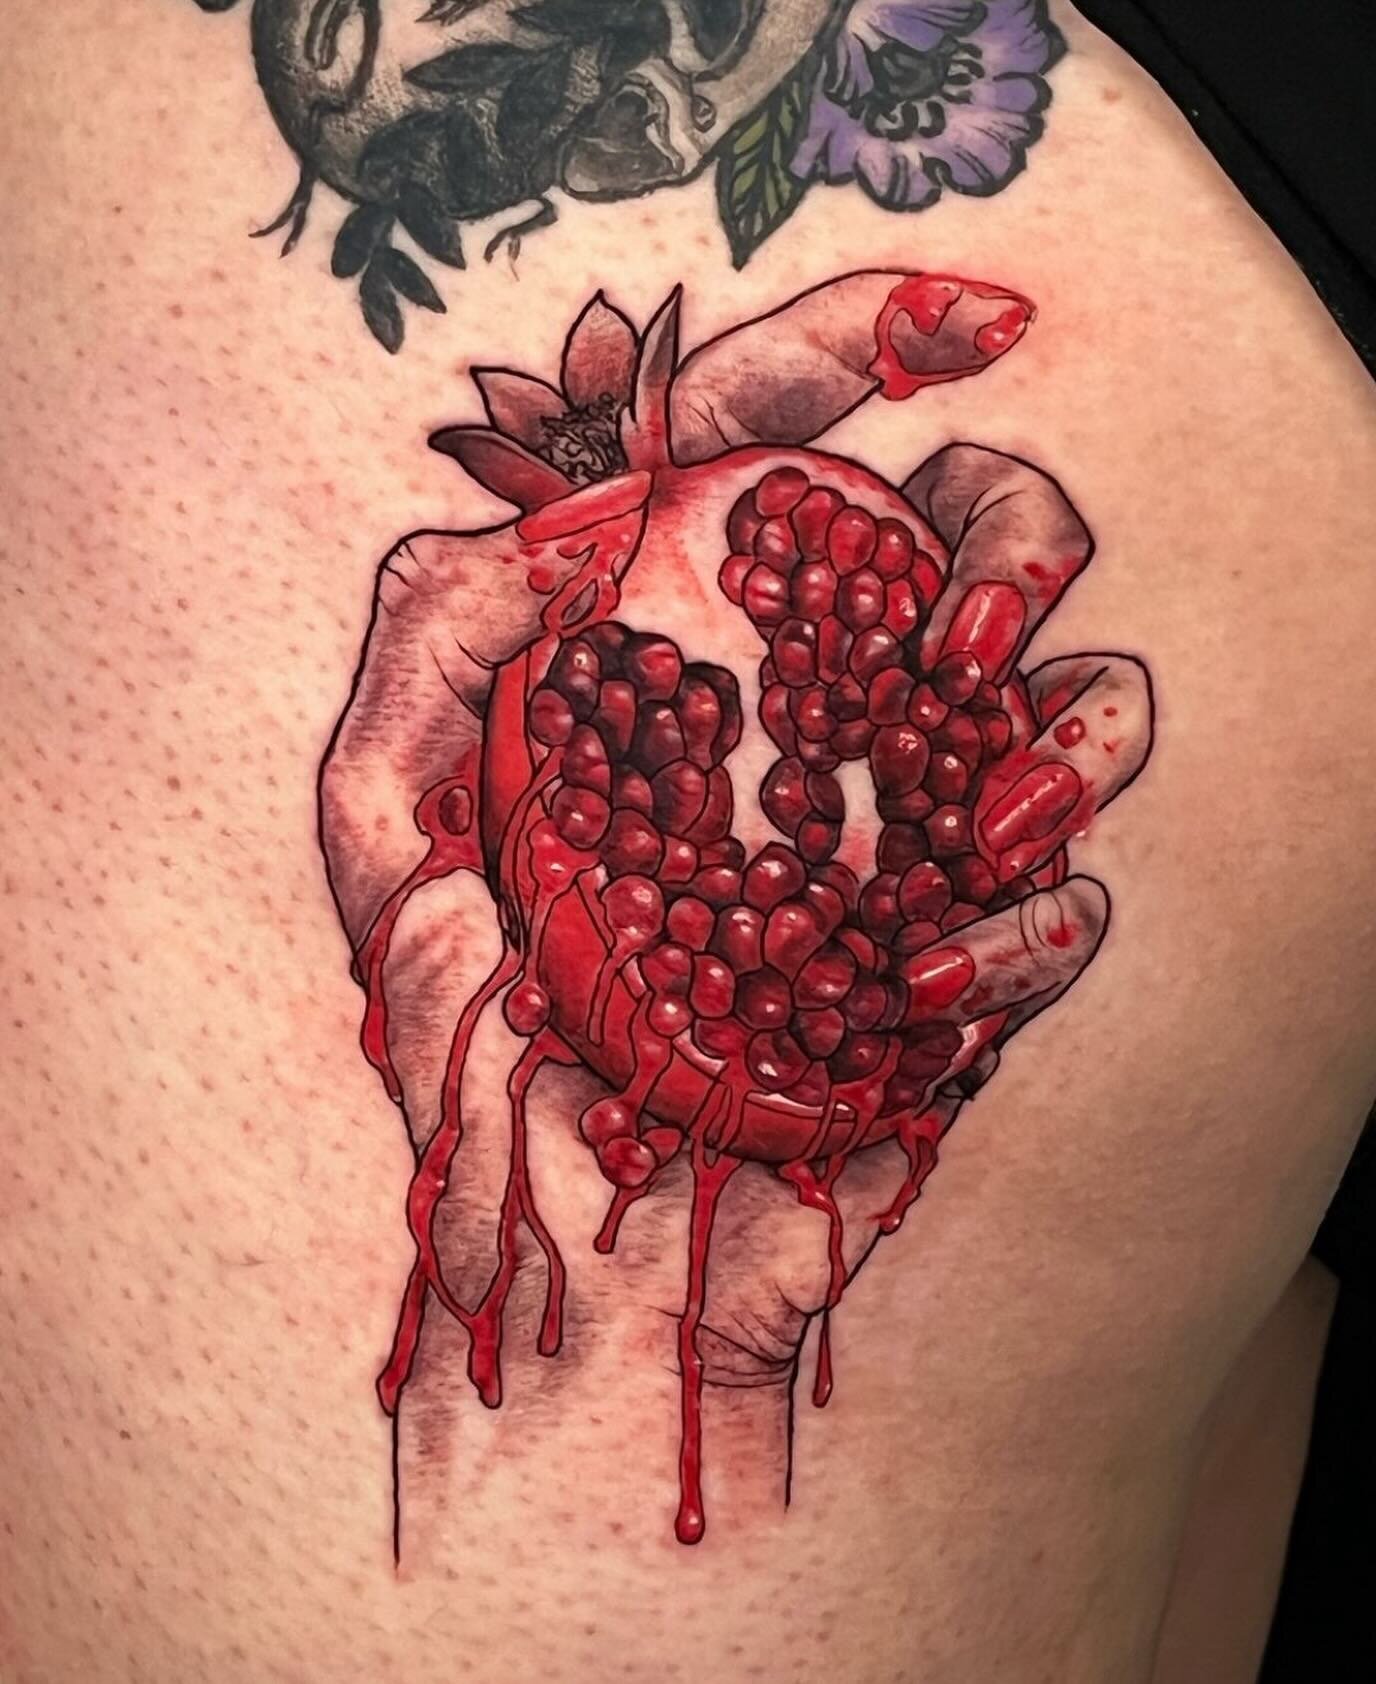 Done by @tattoosbydaryle 

#pomegranatetattoo #colortattoo #tattooartist #southfltattoos